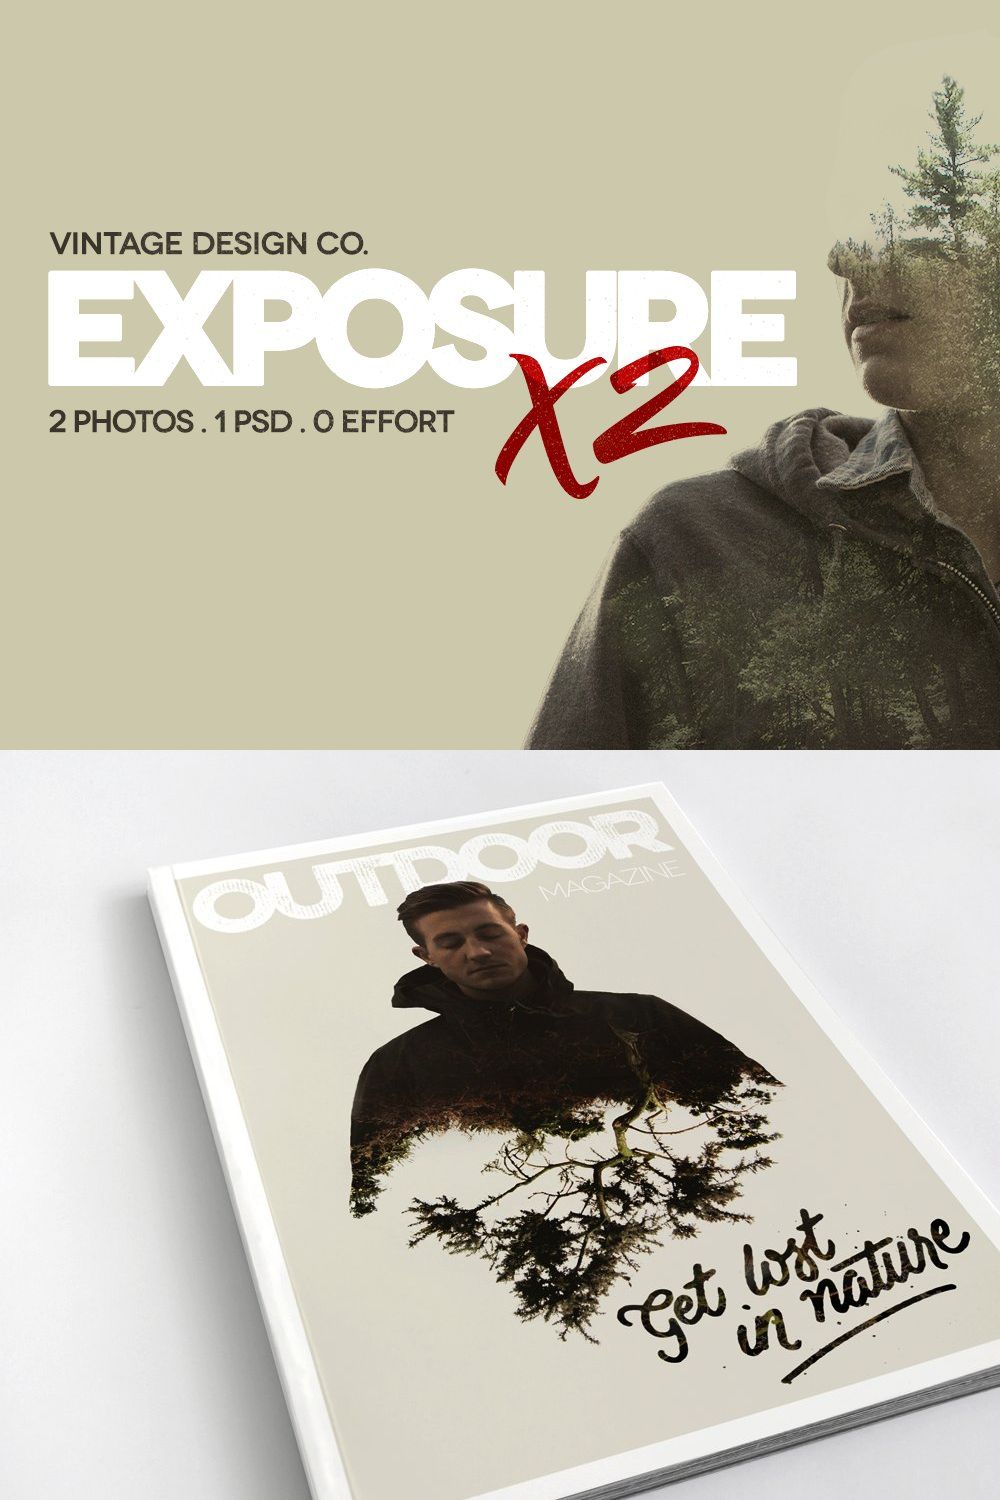 ExposureX2 - Advanced Photo Effects pinterest preview image.